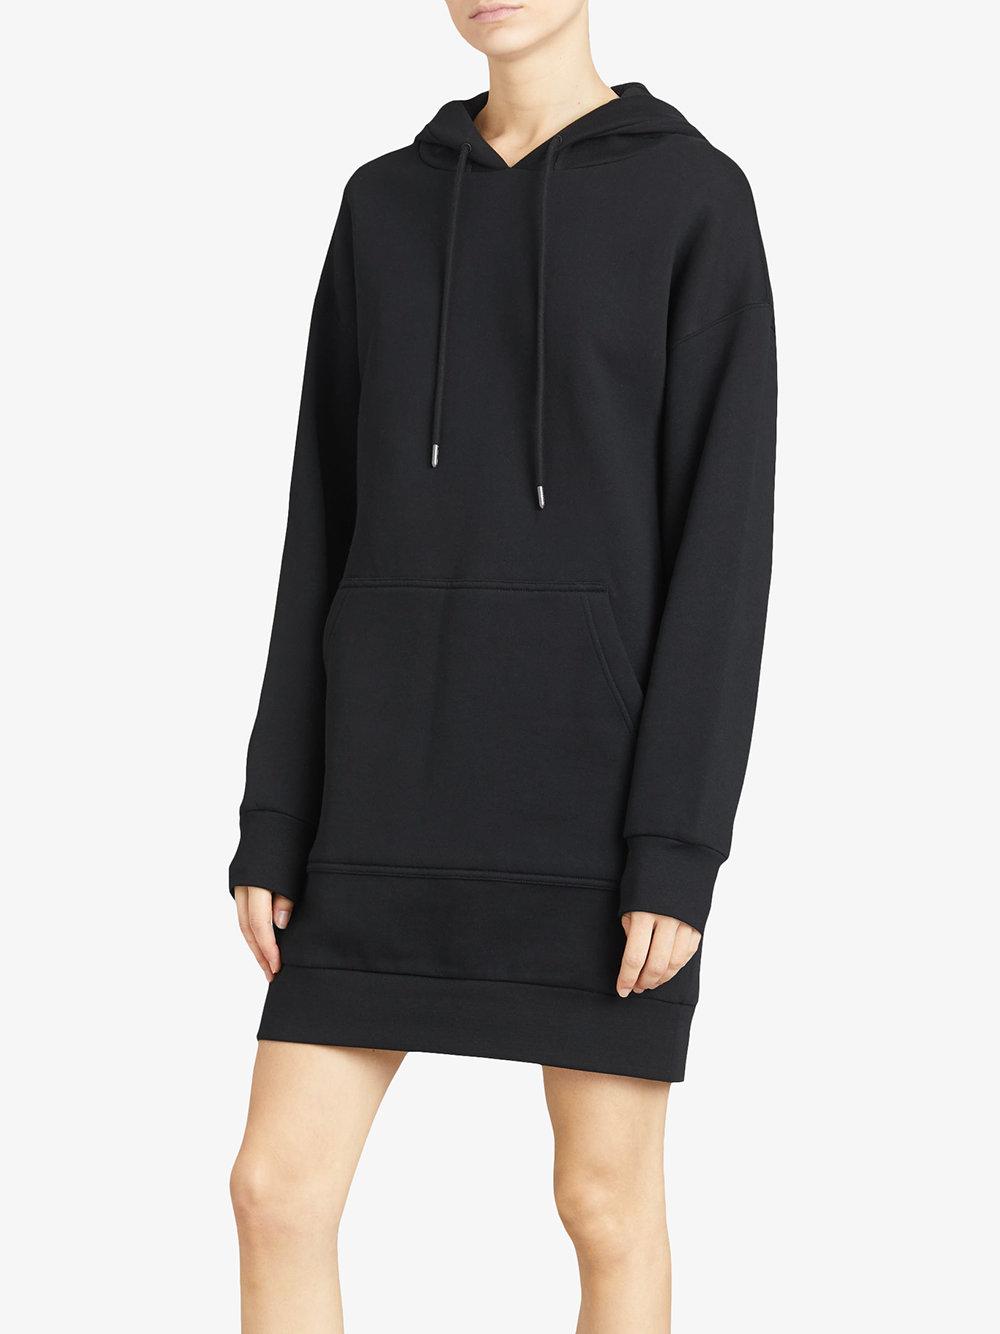 burberry hoodie dress